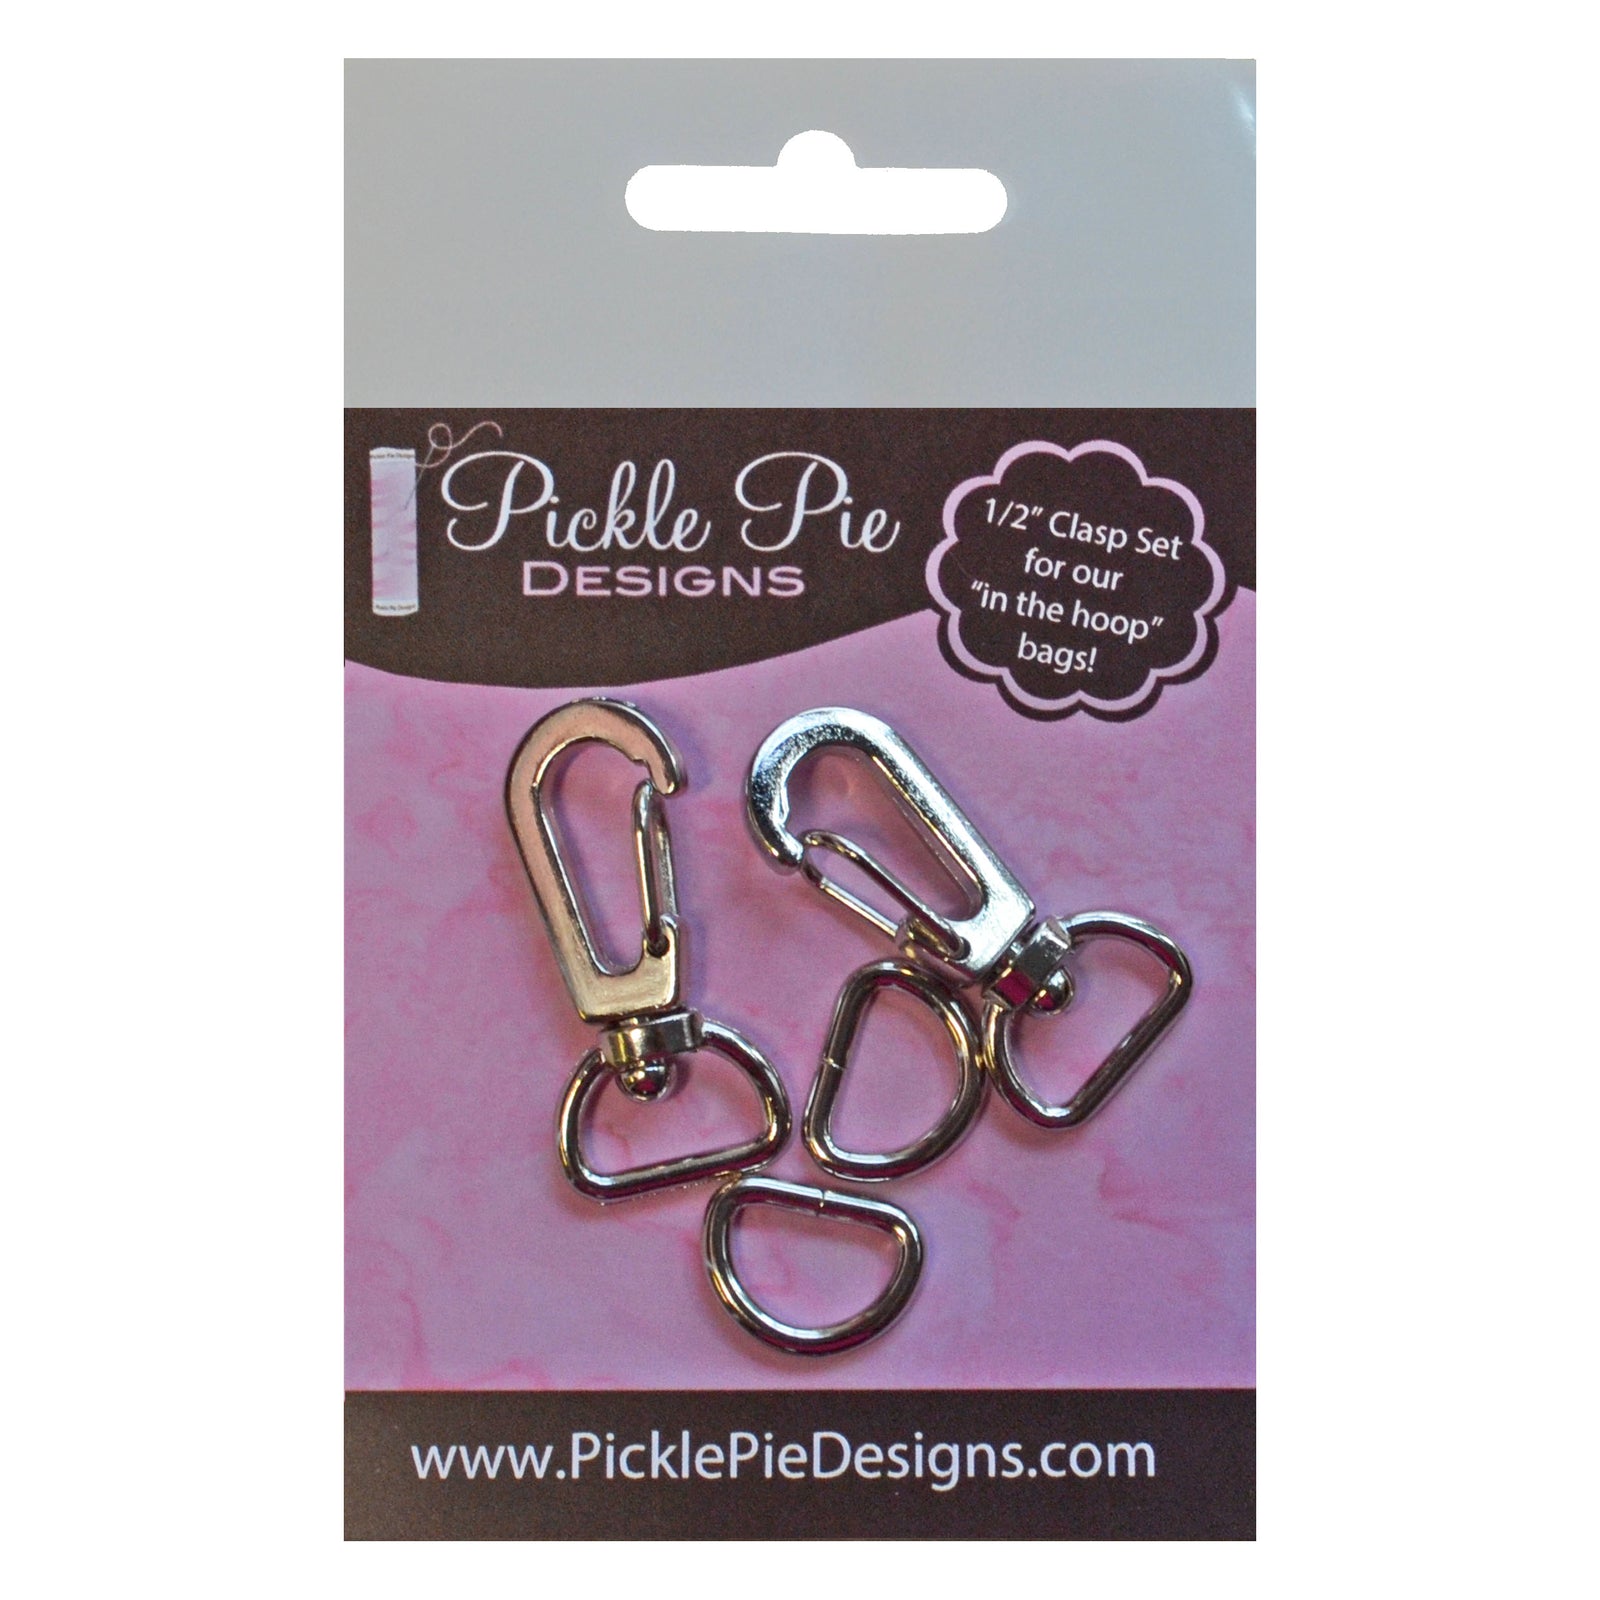 4” Duckbill Applique and Machine Embroidery Scissors - PicklePie Designs